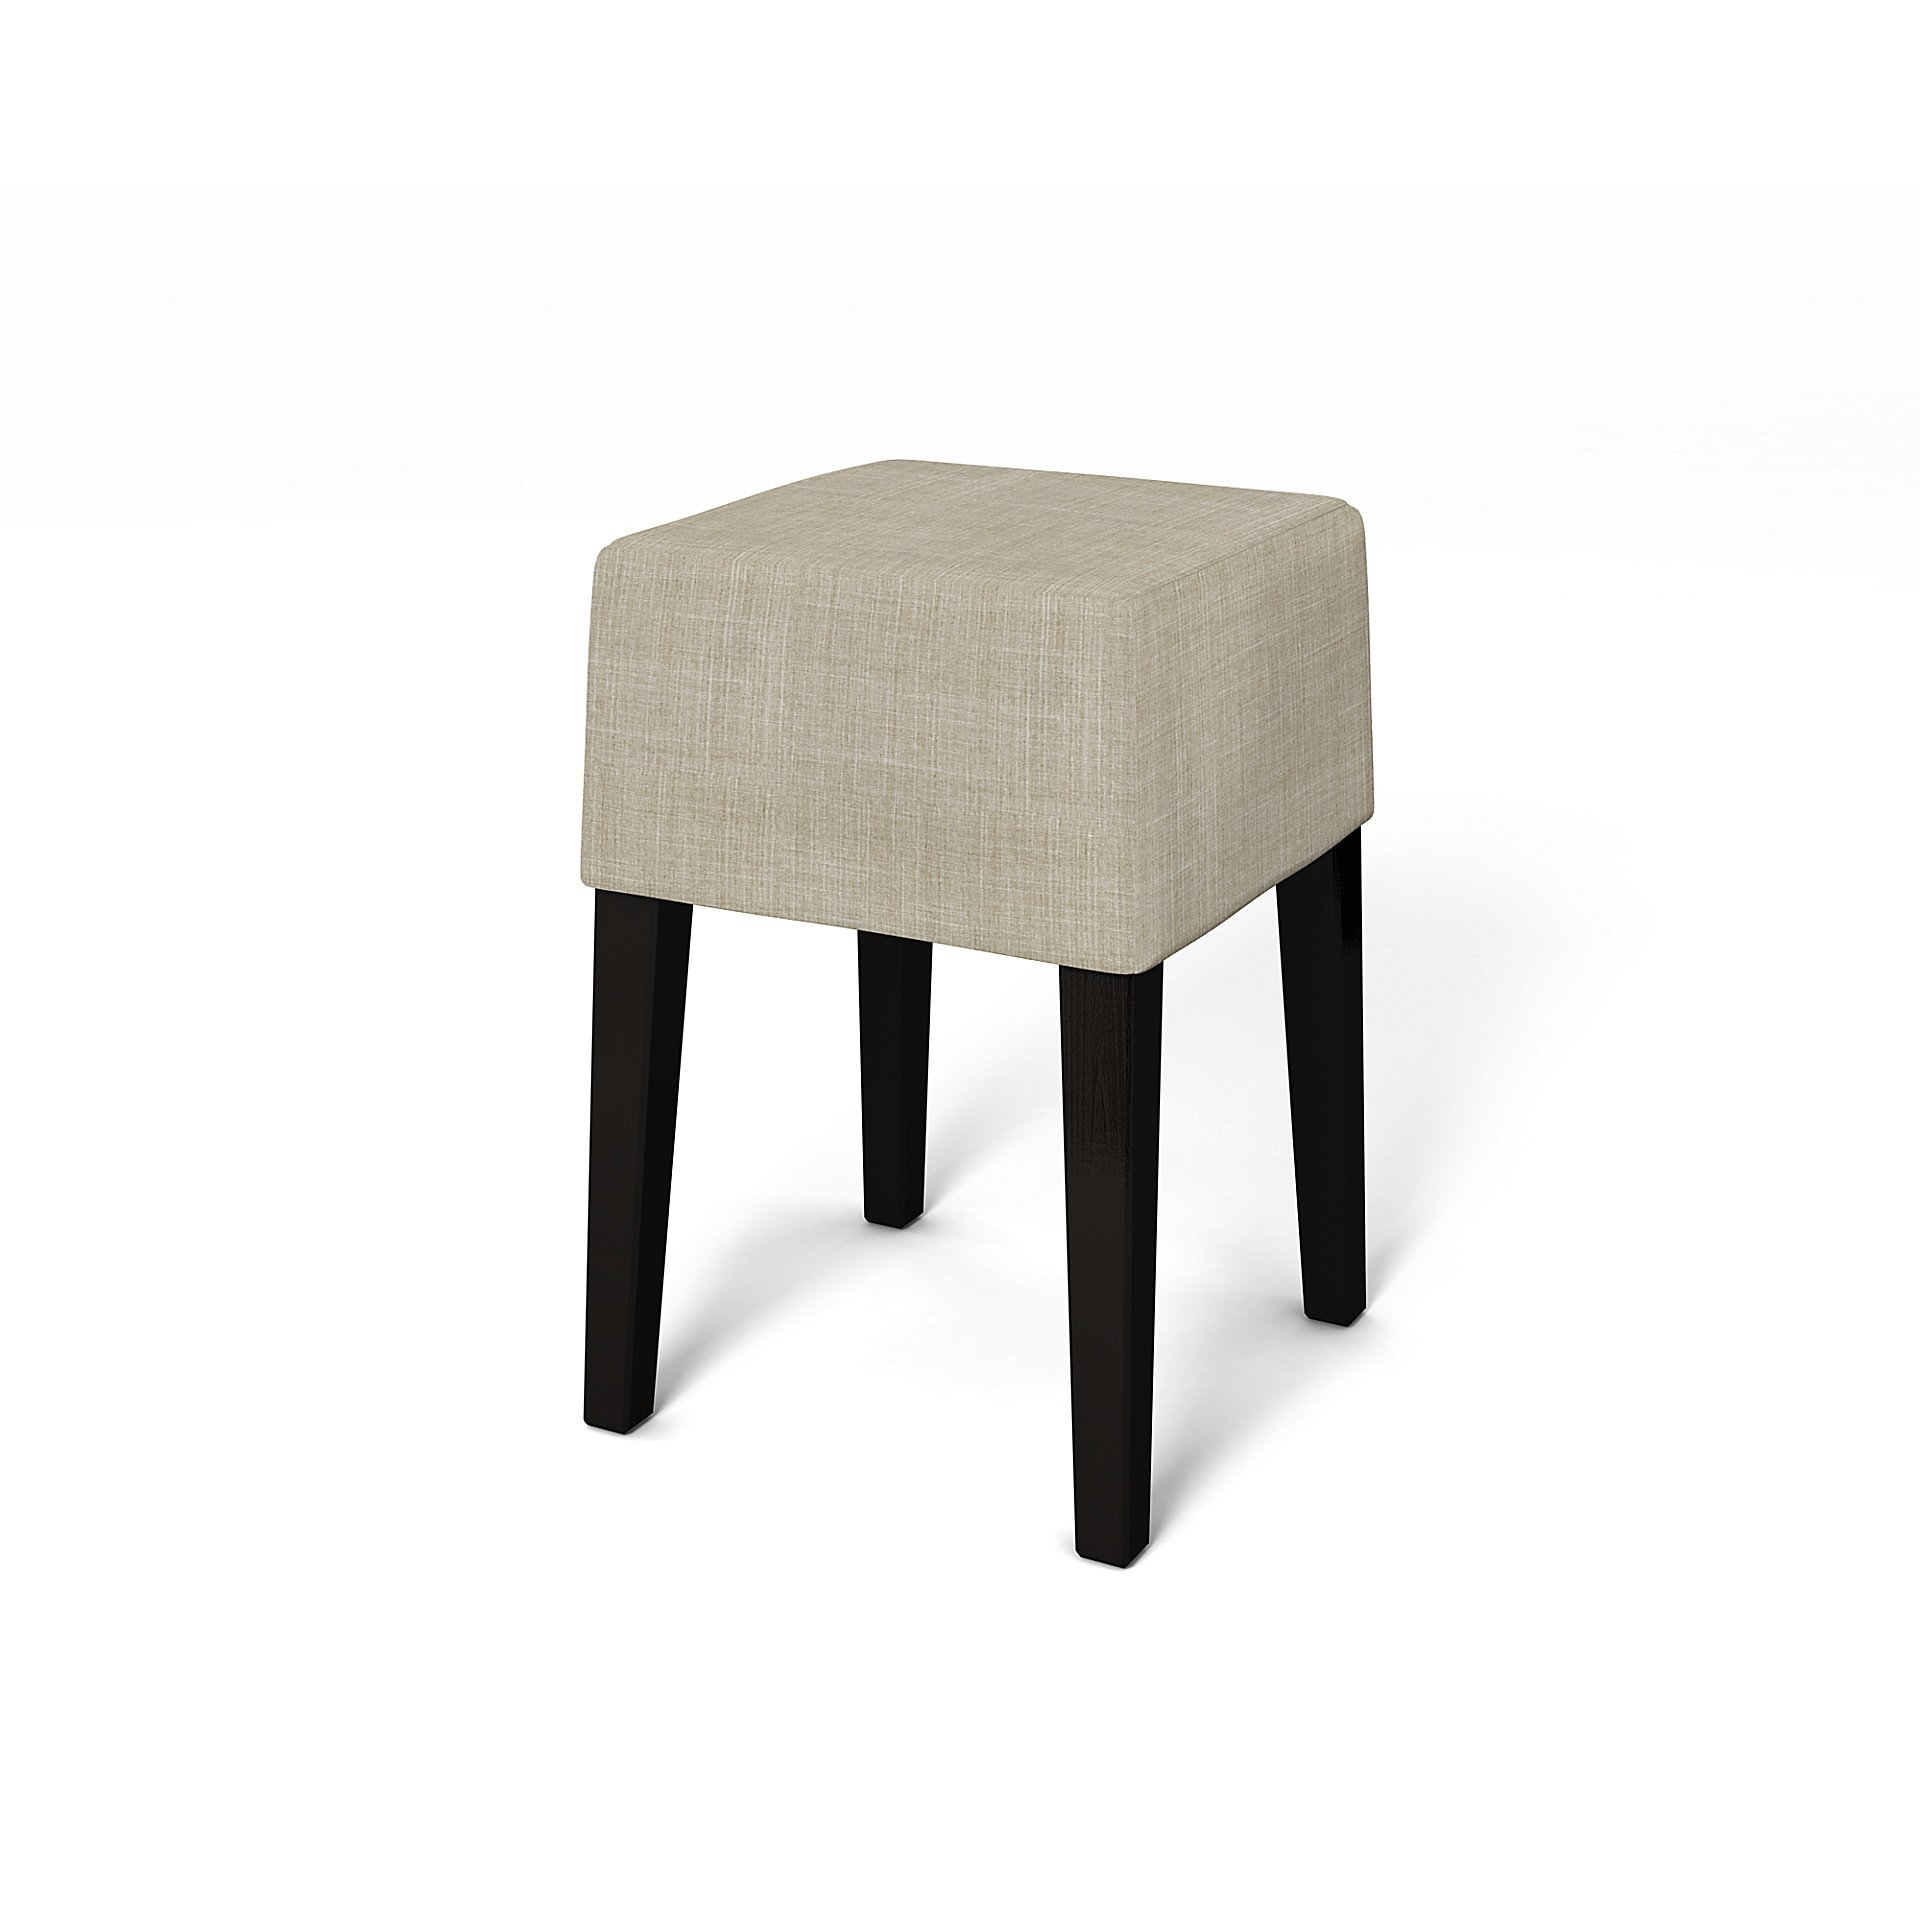 IKEA - Nils Stool Cover, Sand Beige, Boucle & Texture - Bemz